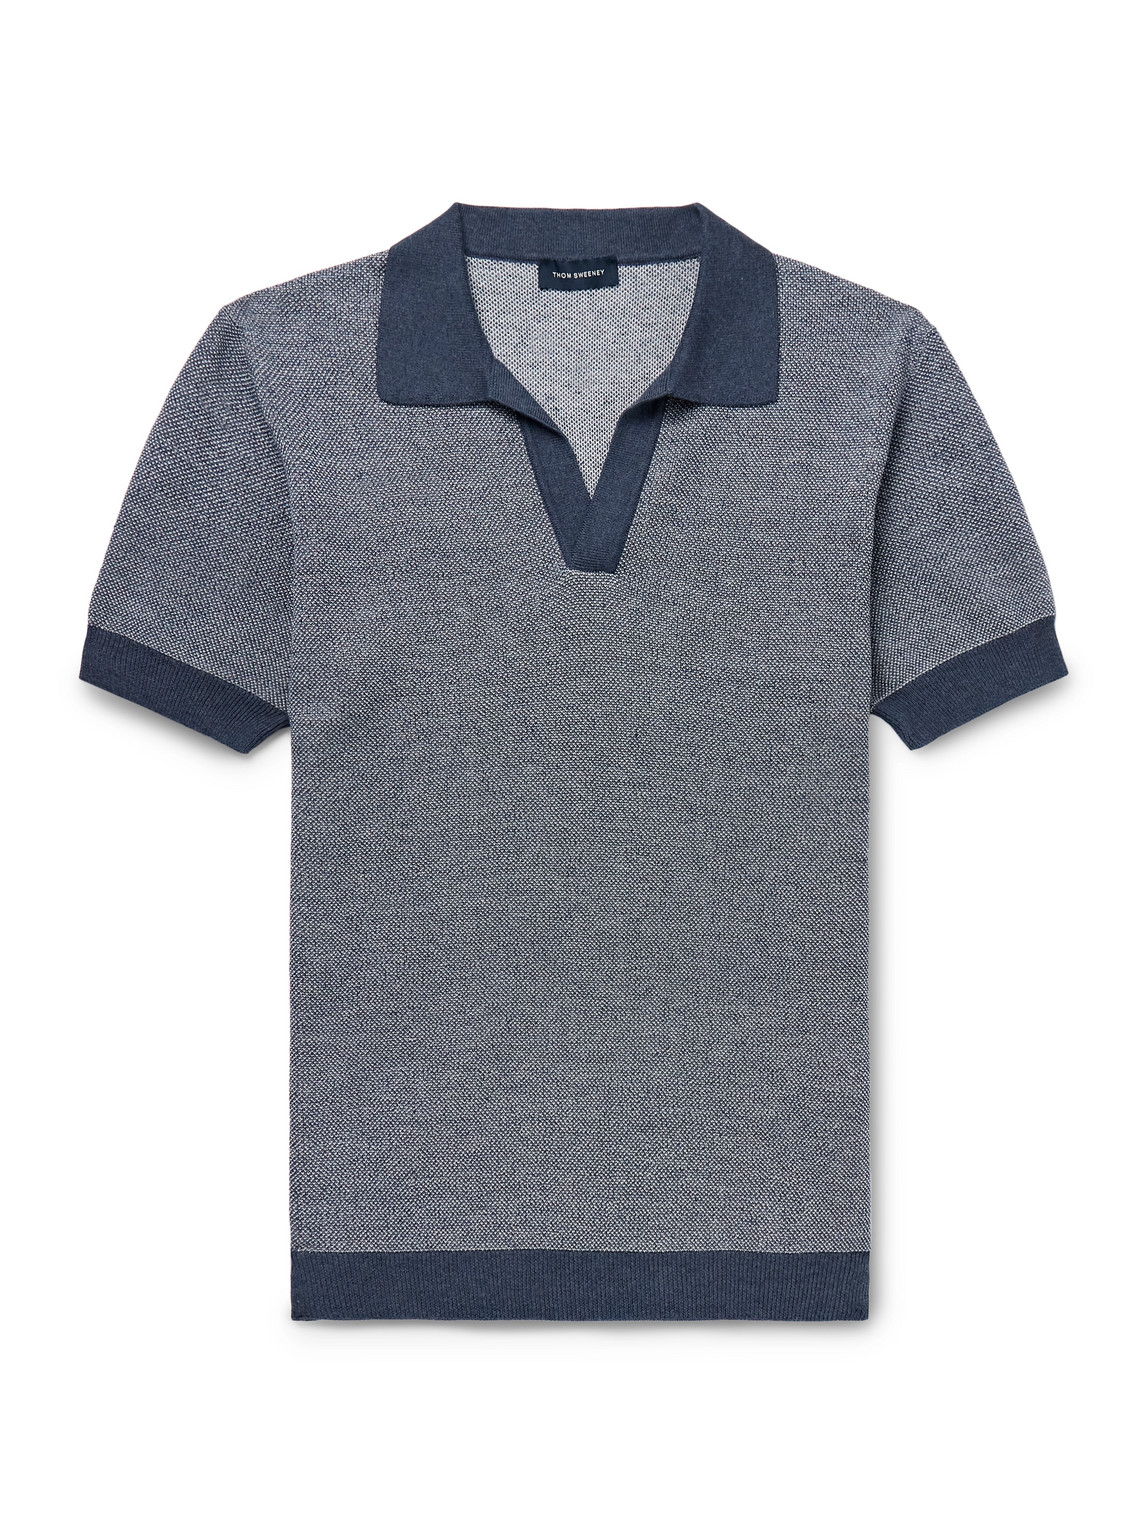 Birdseye Cotton and Linen-Blend Polo Shirt